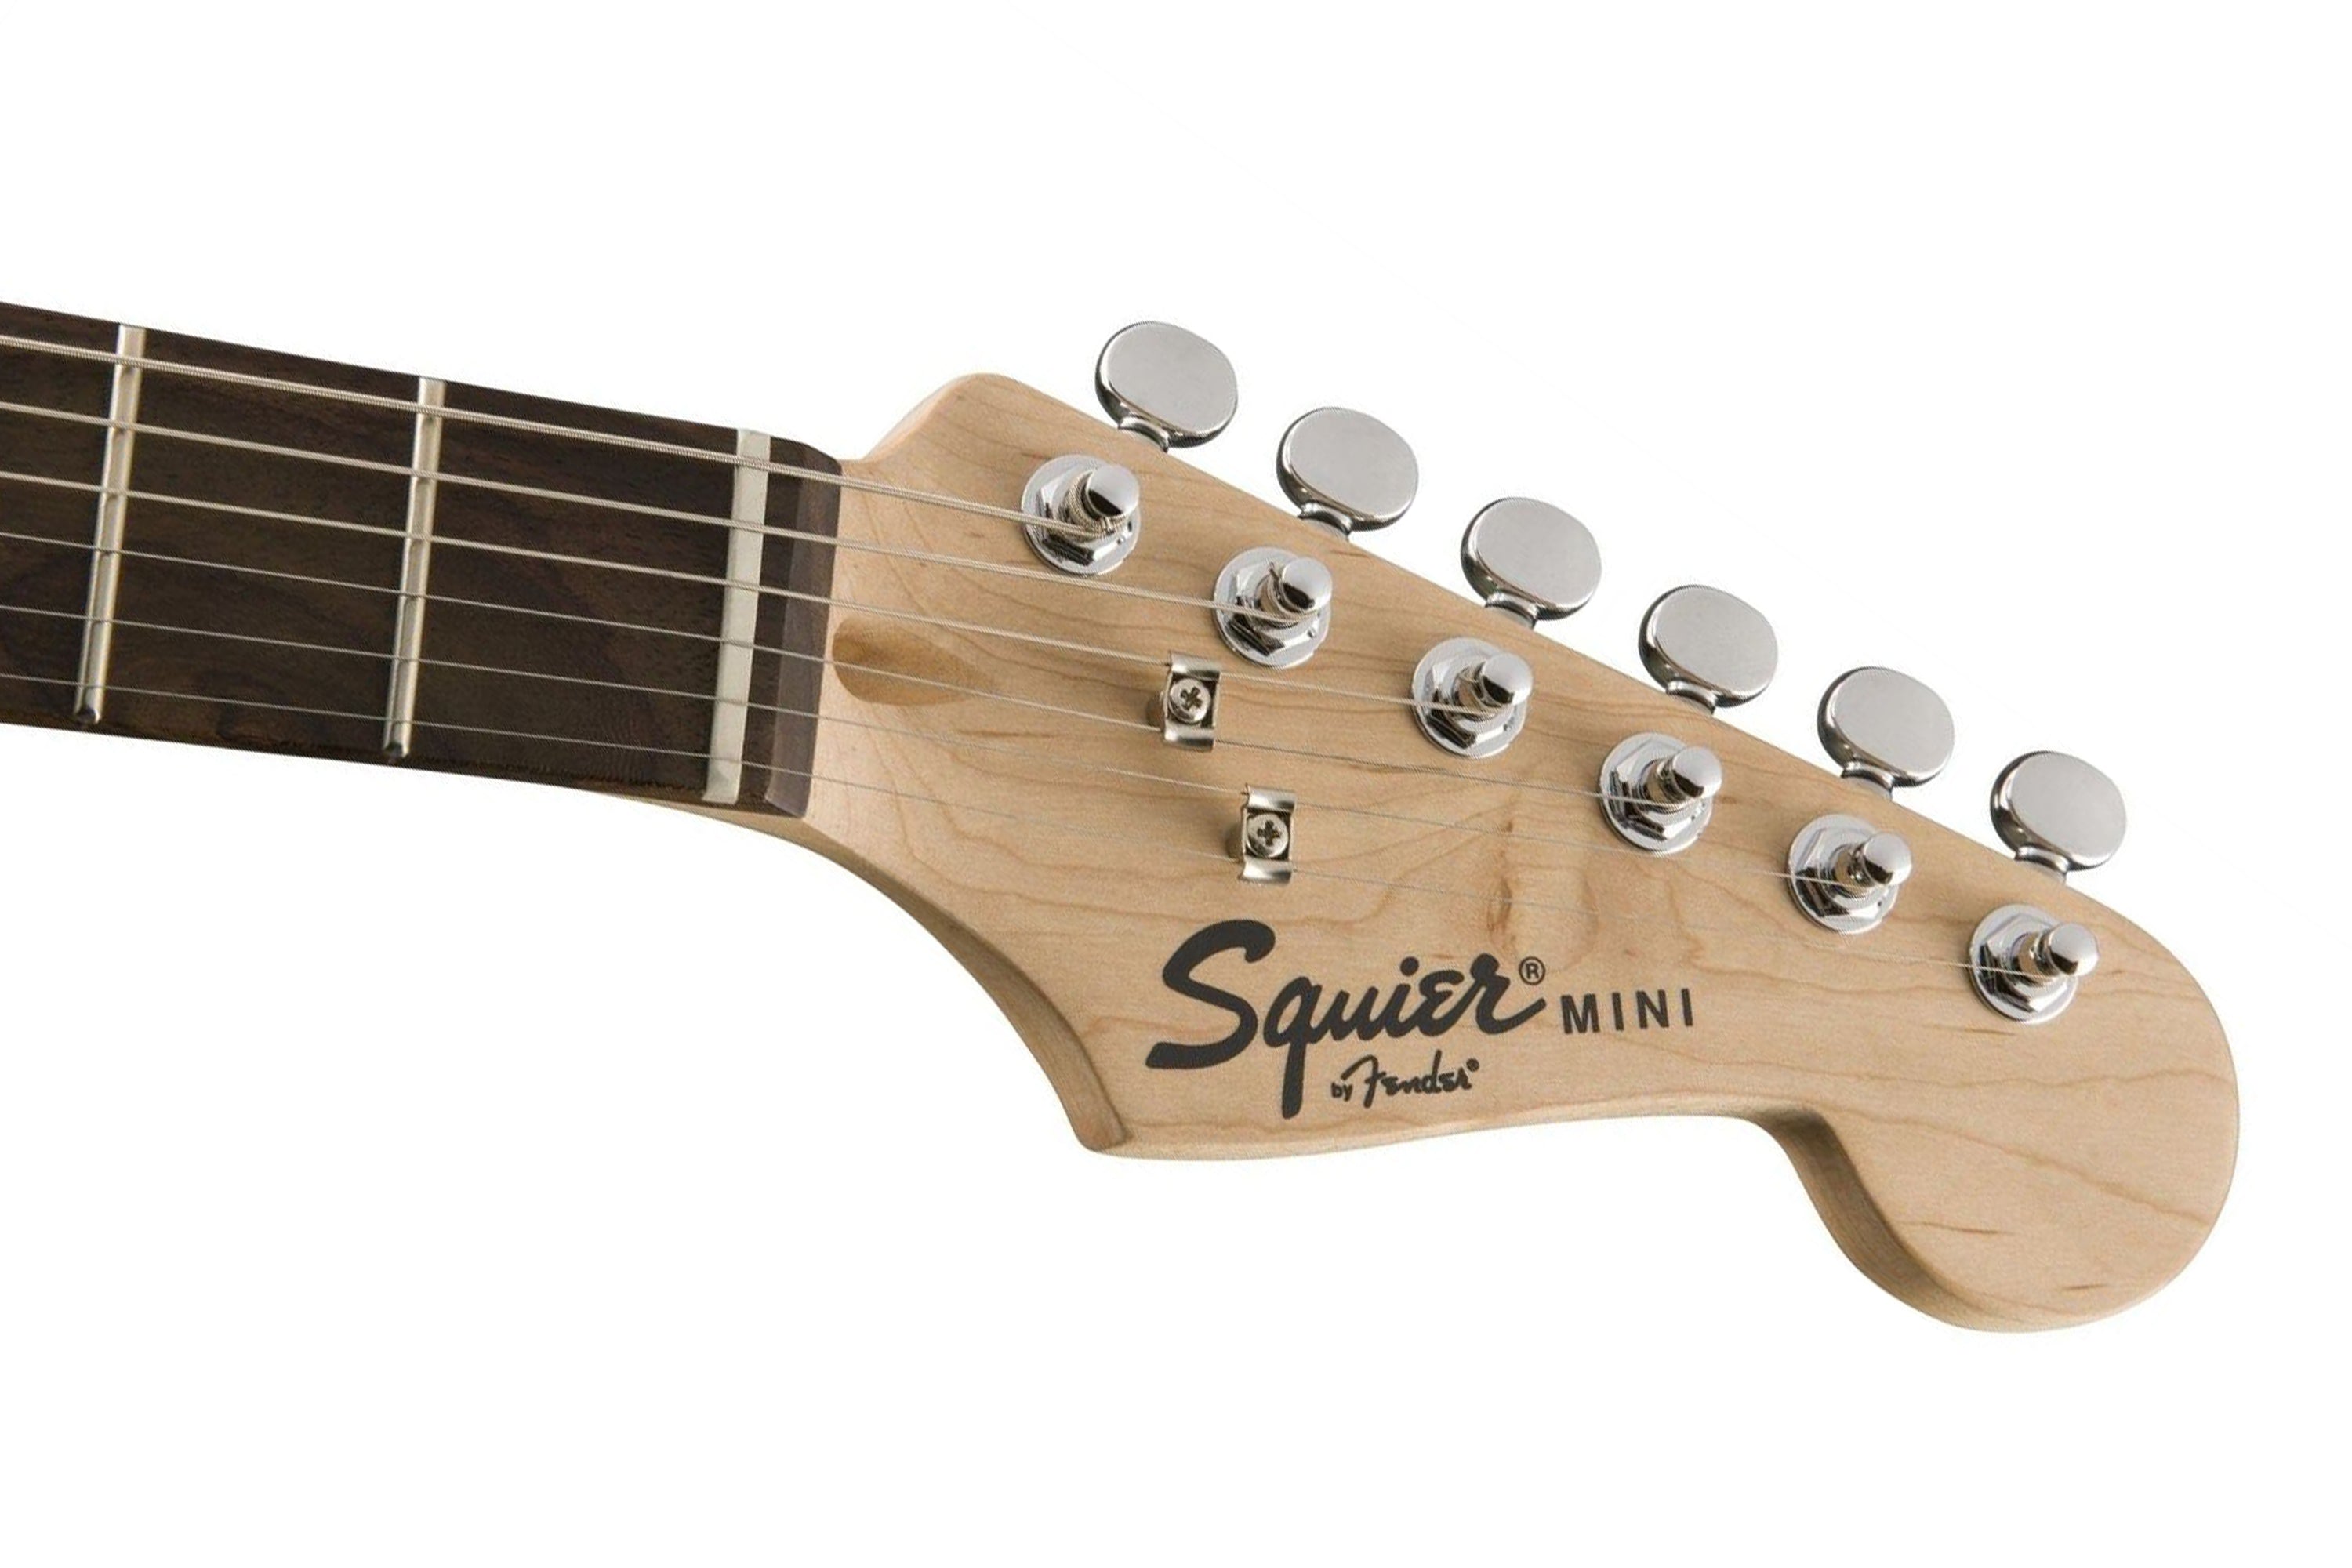 Squire By Fender Mini Stratocaster Guitar - Black